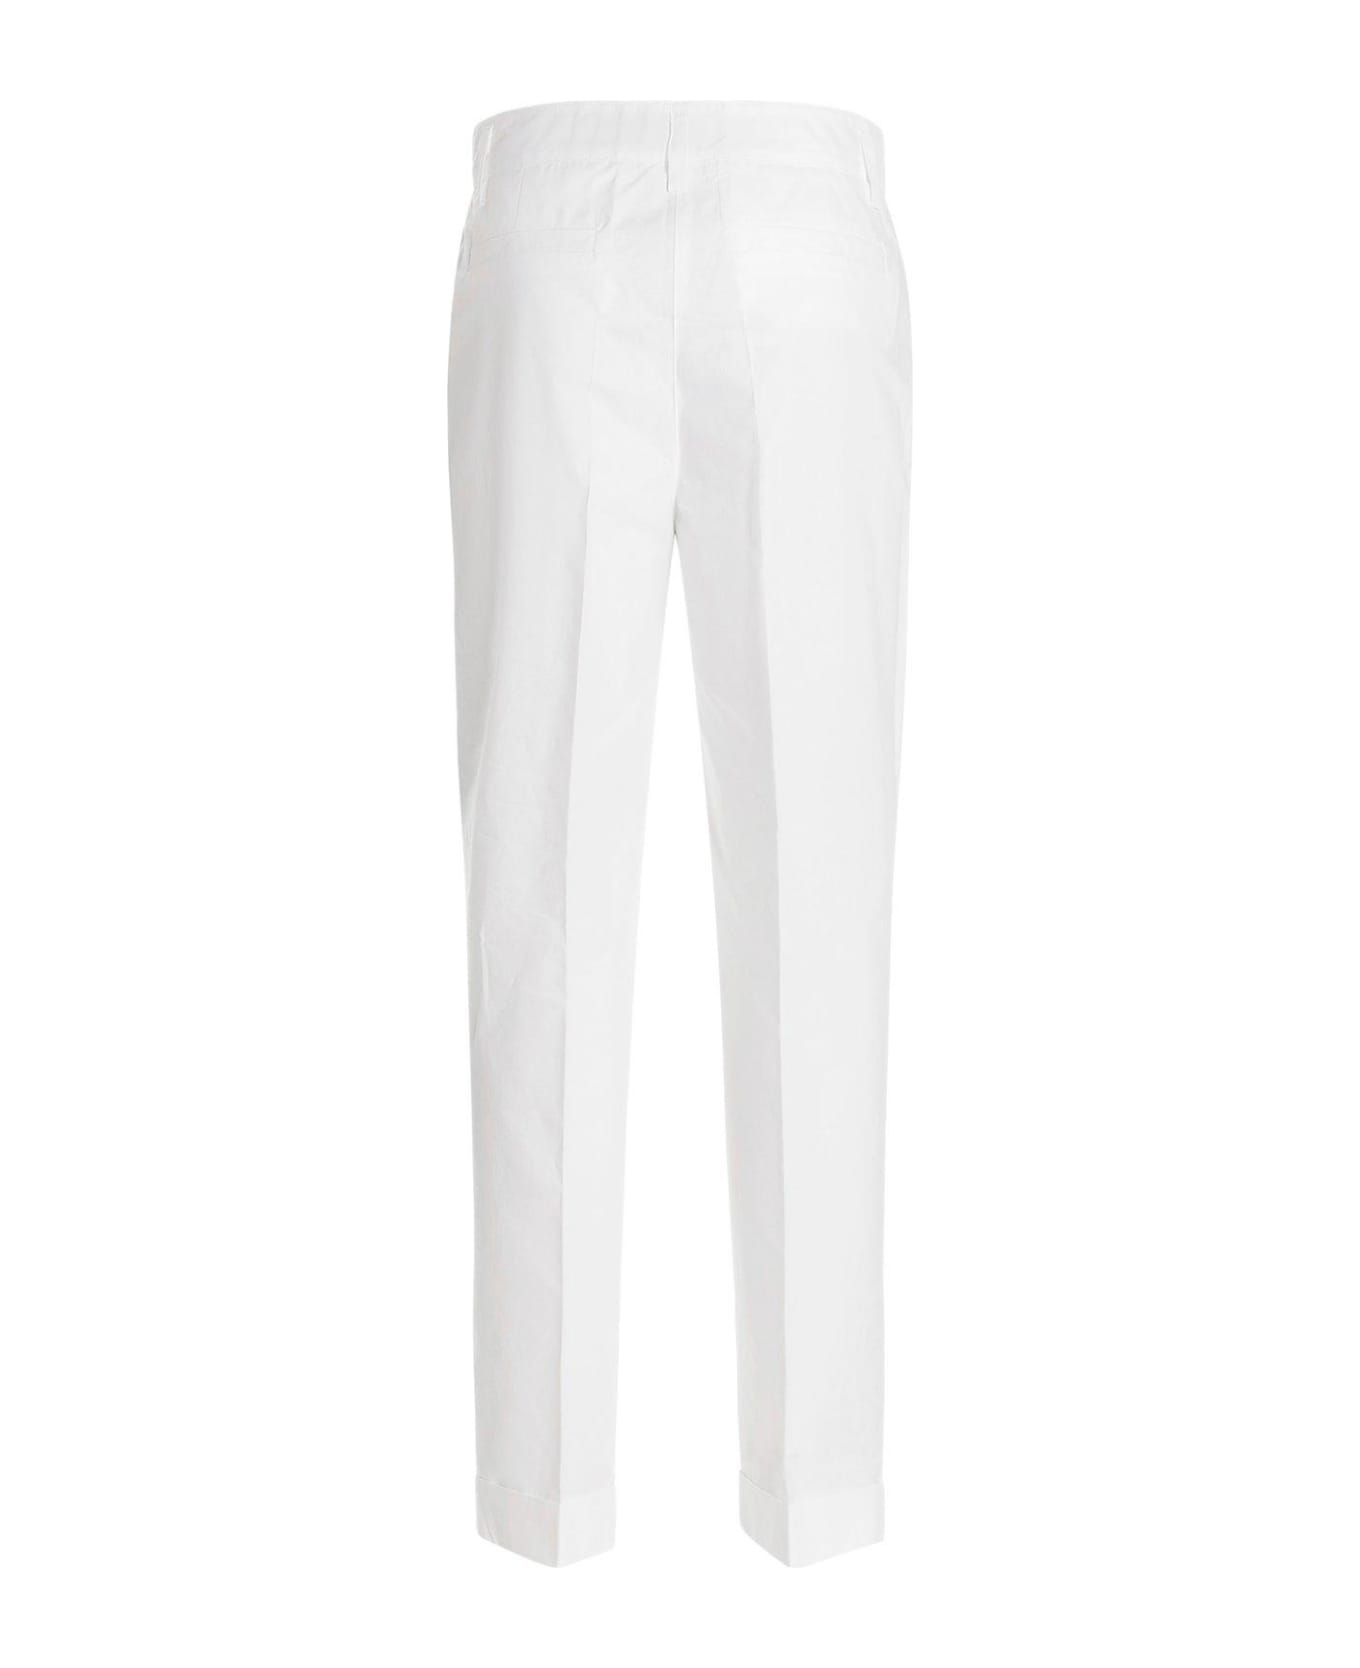 Parosh Slim Fit Trousers - White ボトムス